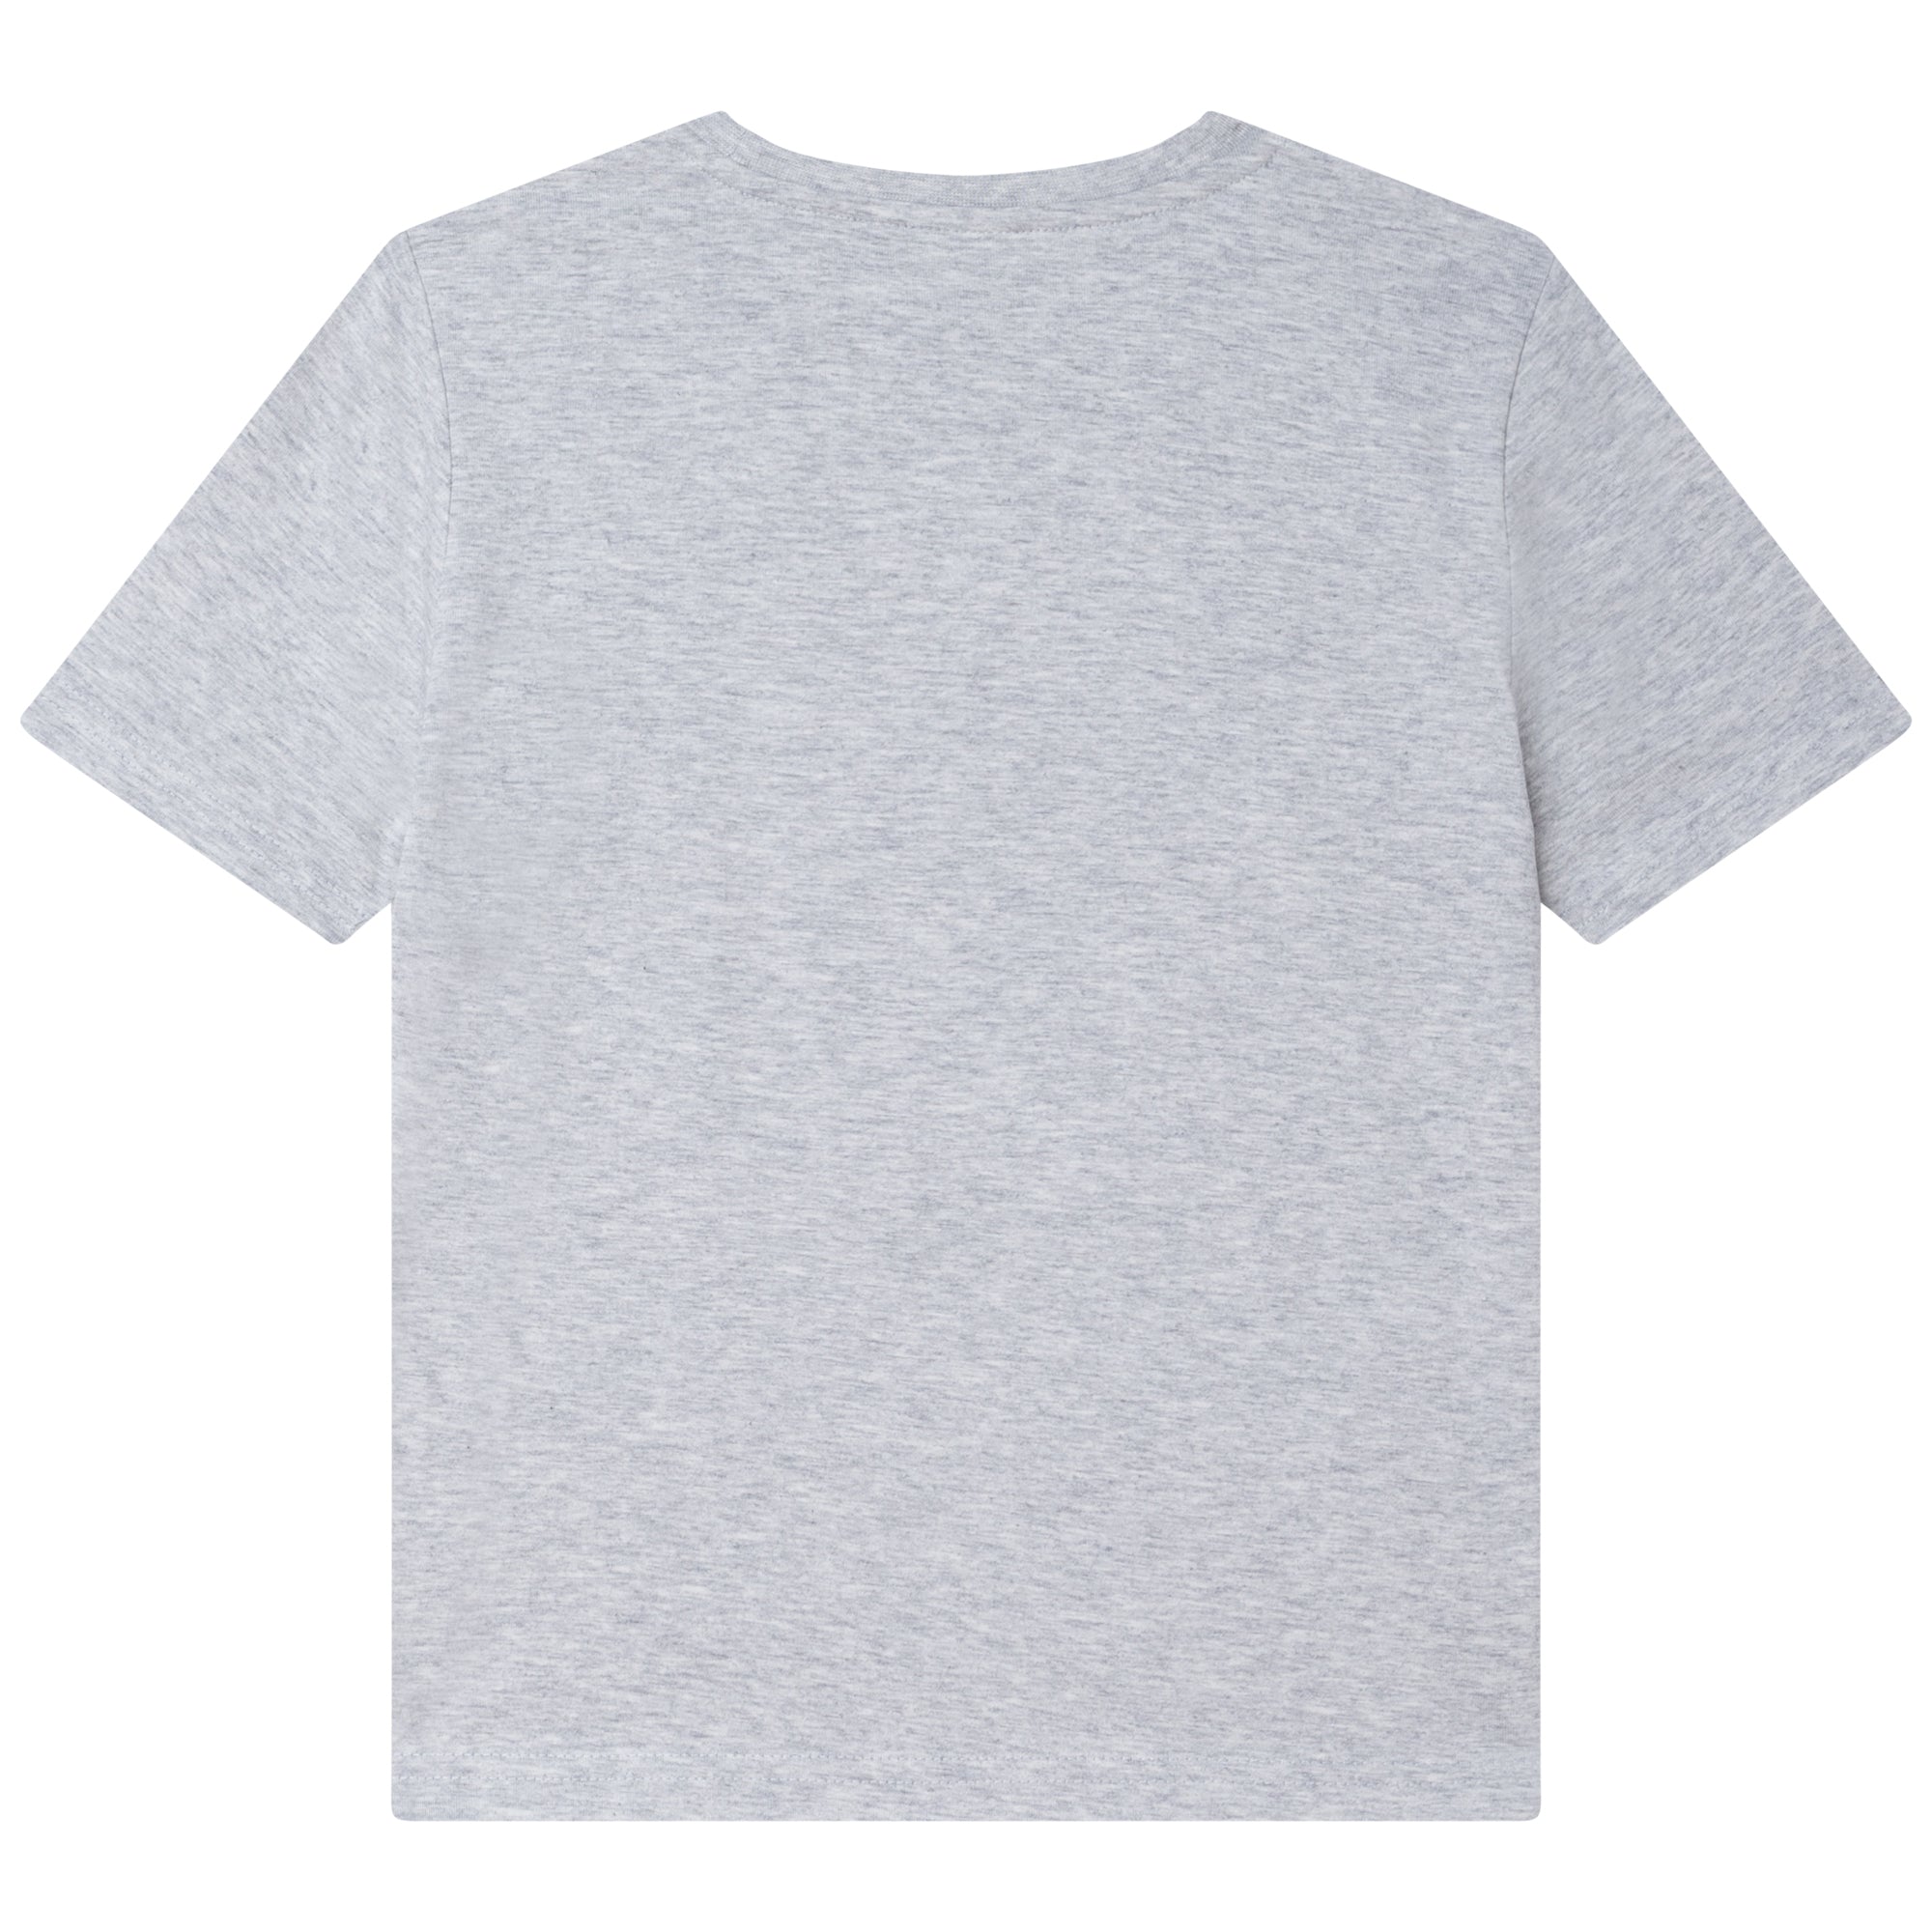 Hugo Boss Boys Grey Logo T-Shirt